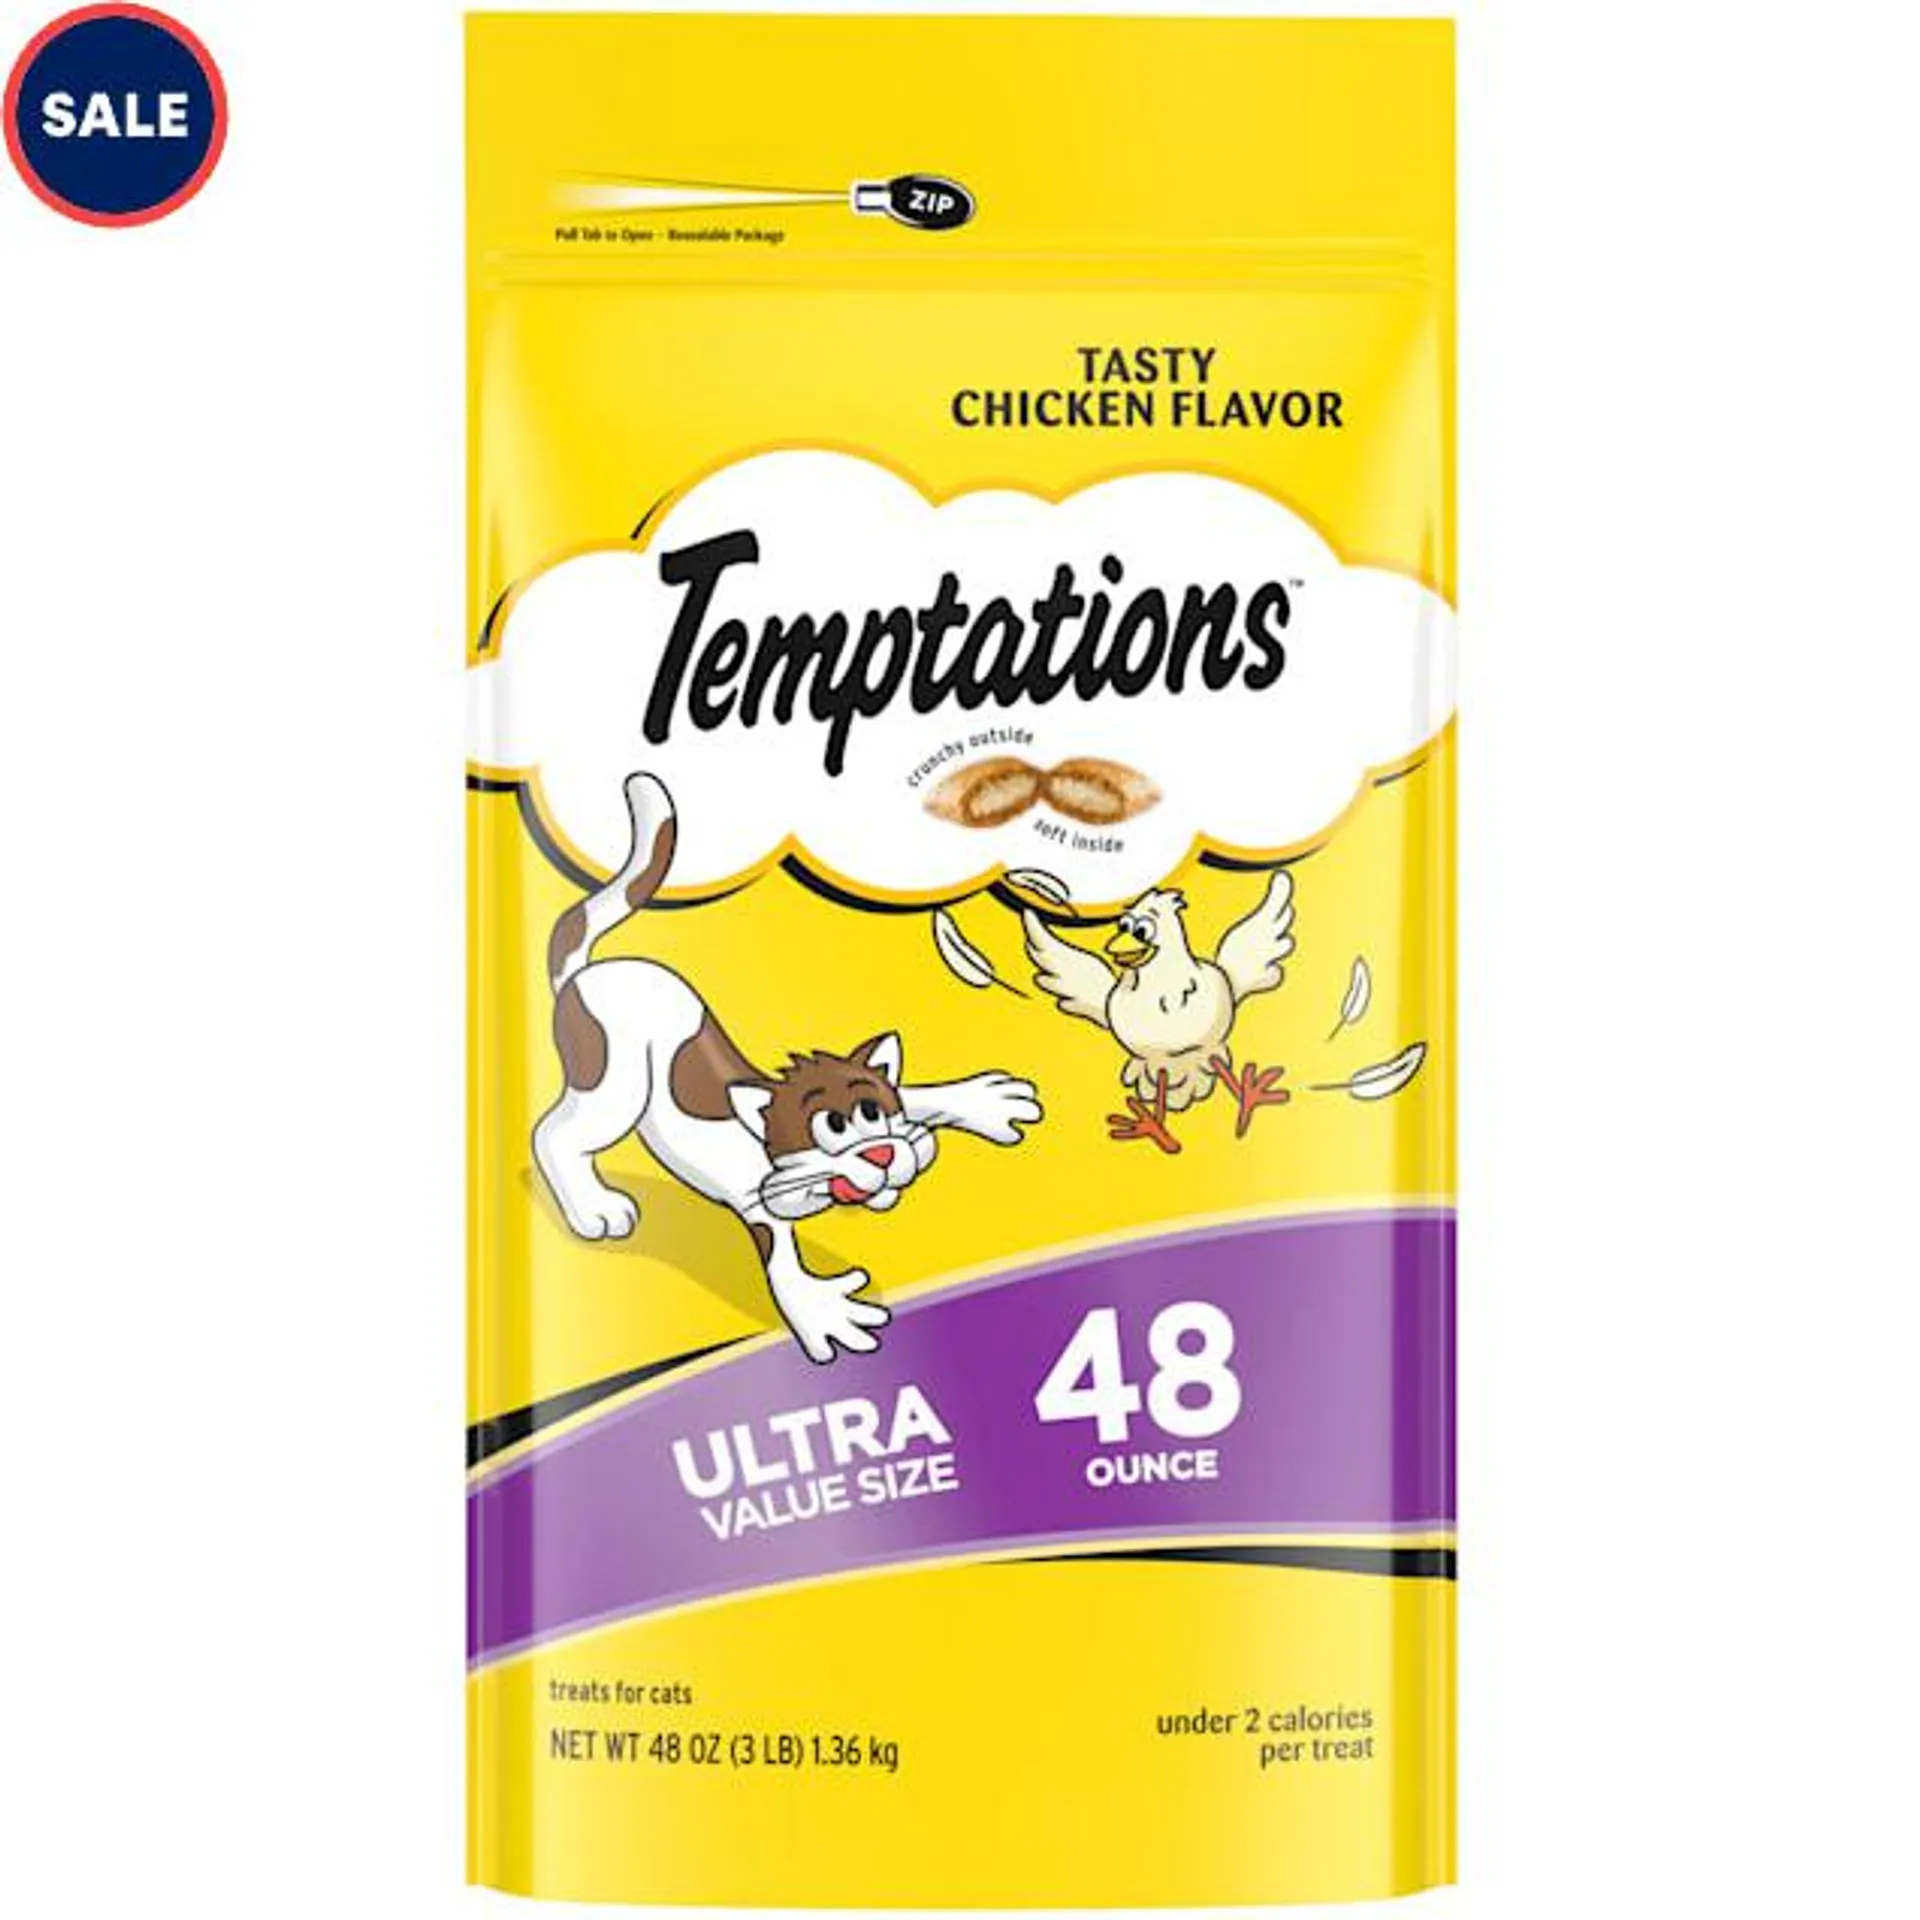 Temptations Classics Tasty Chicken Flavor Crunchy and Soft Cat Treats, 48 oz.